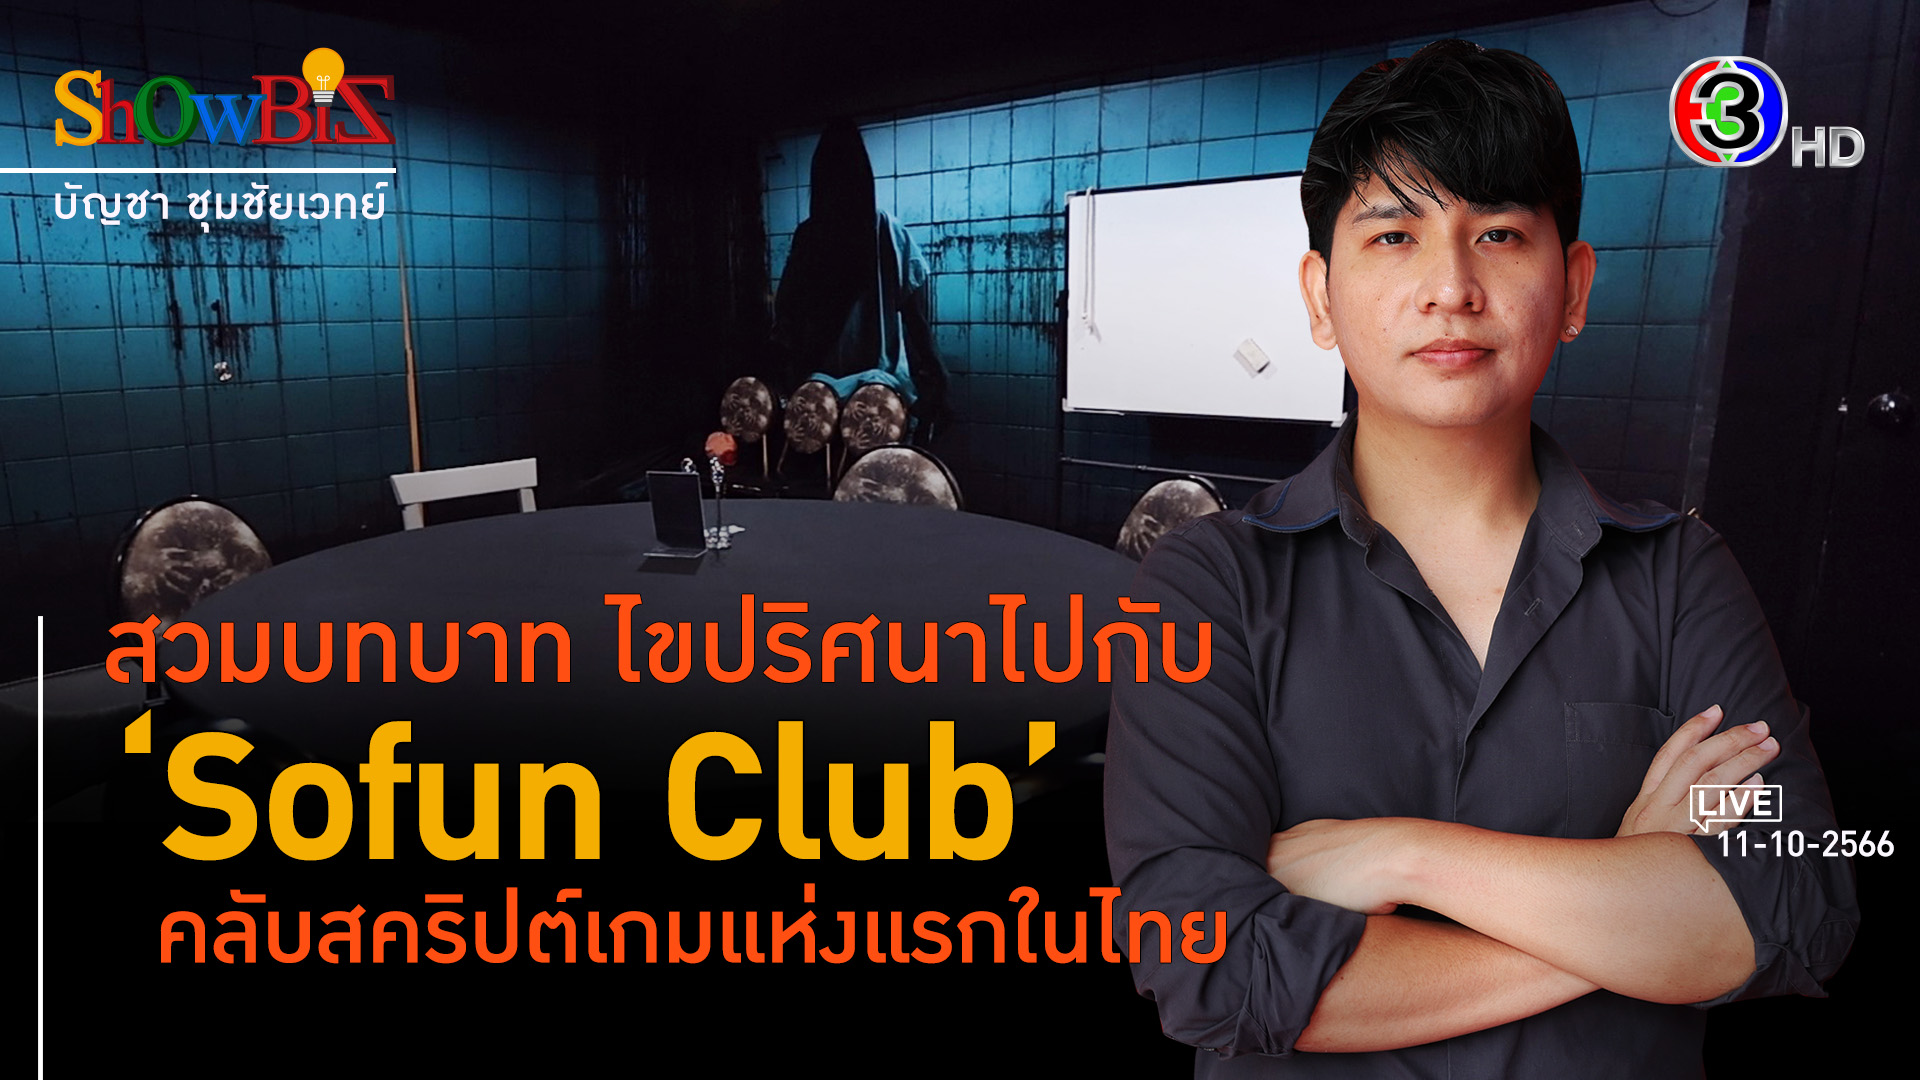 'Sofun Club' ร้านเกมส์ยุคใหม่ สวมบทบาทเสมือนจริงในเกมส์ l 11 ต.ค. 66 FULL l BTimes ShowBiz